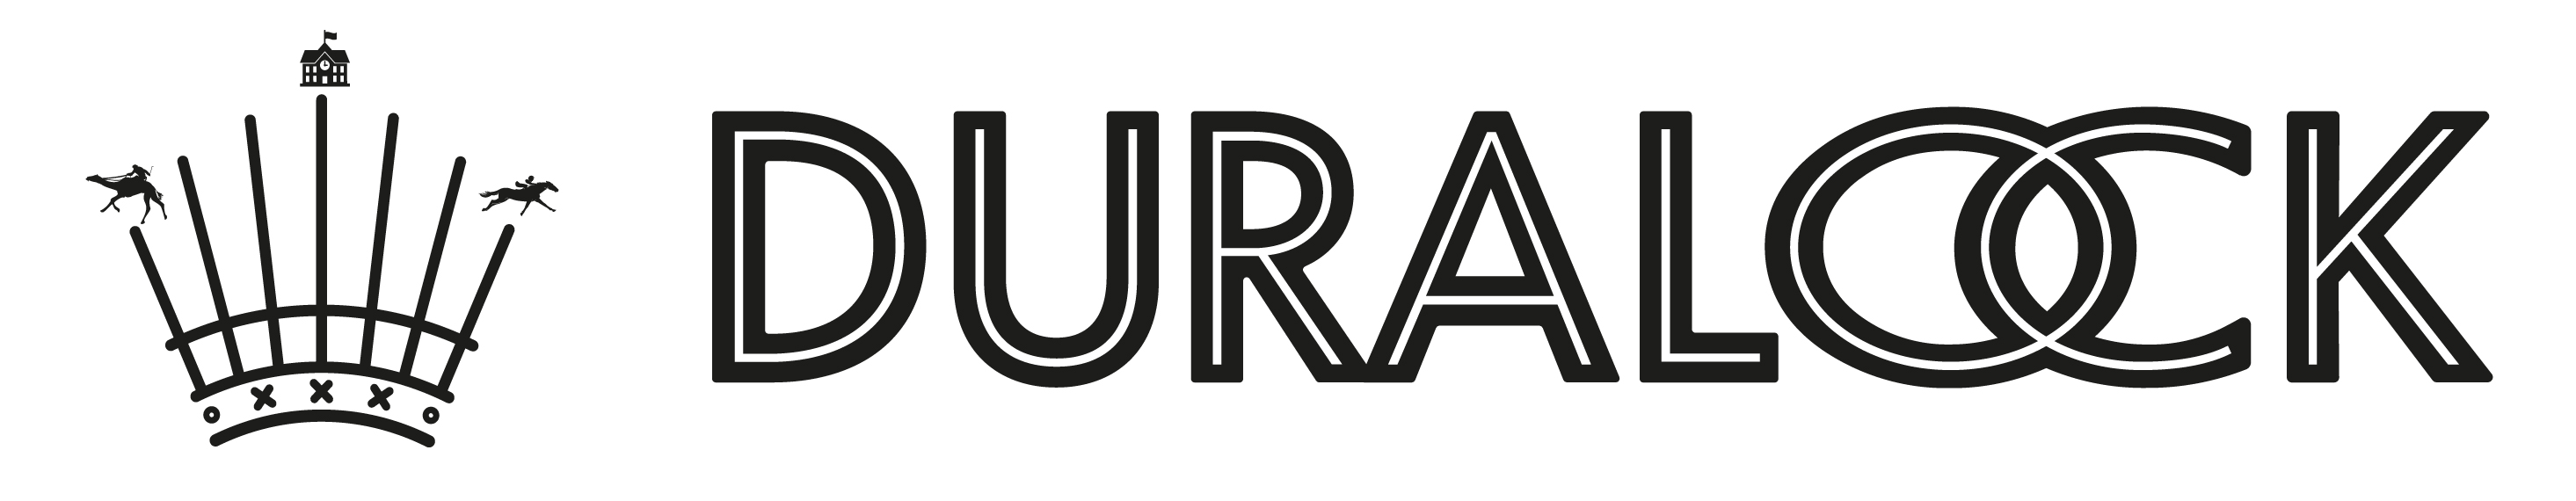 Duralock Logo Horizontal